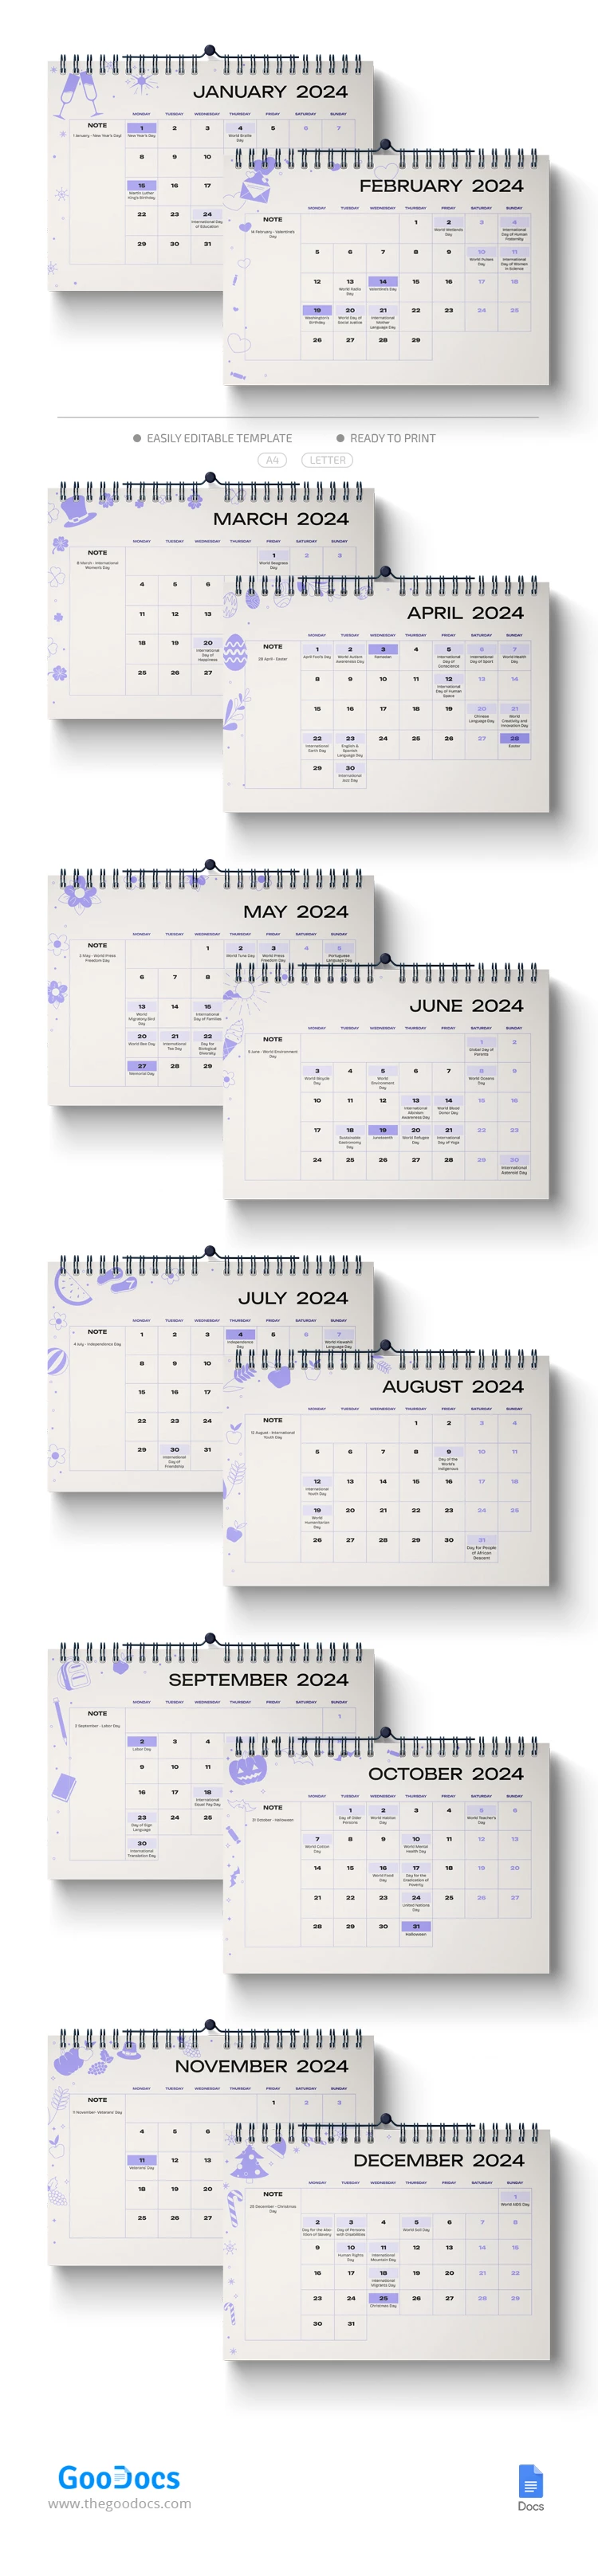 Calendario de Vacaciones 2024 - free Google Docs Template - 10068550